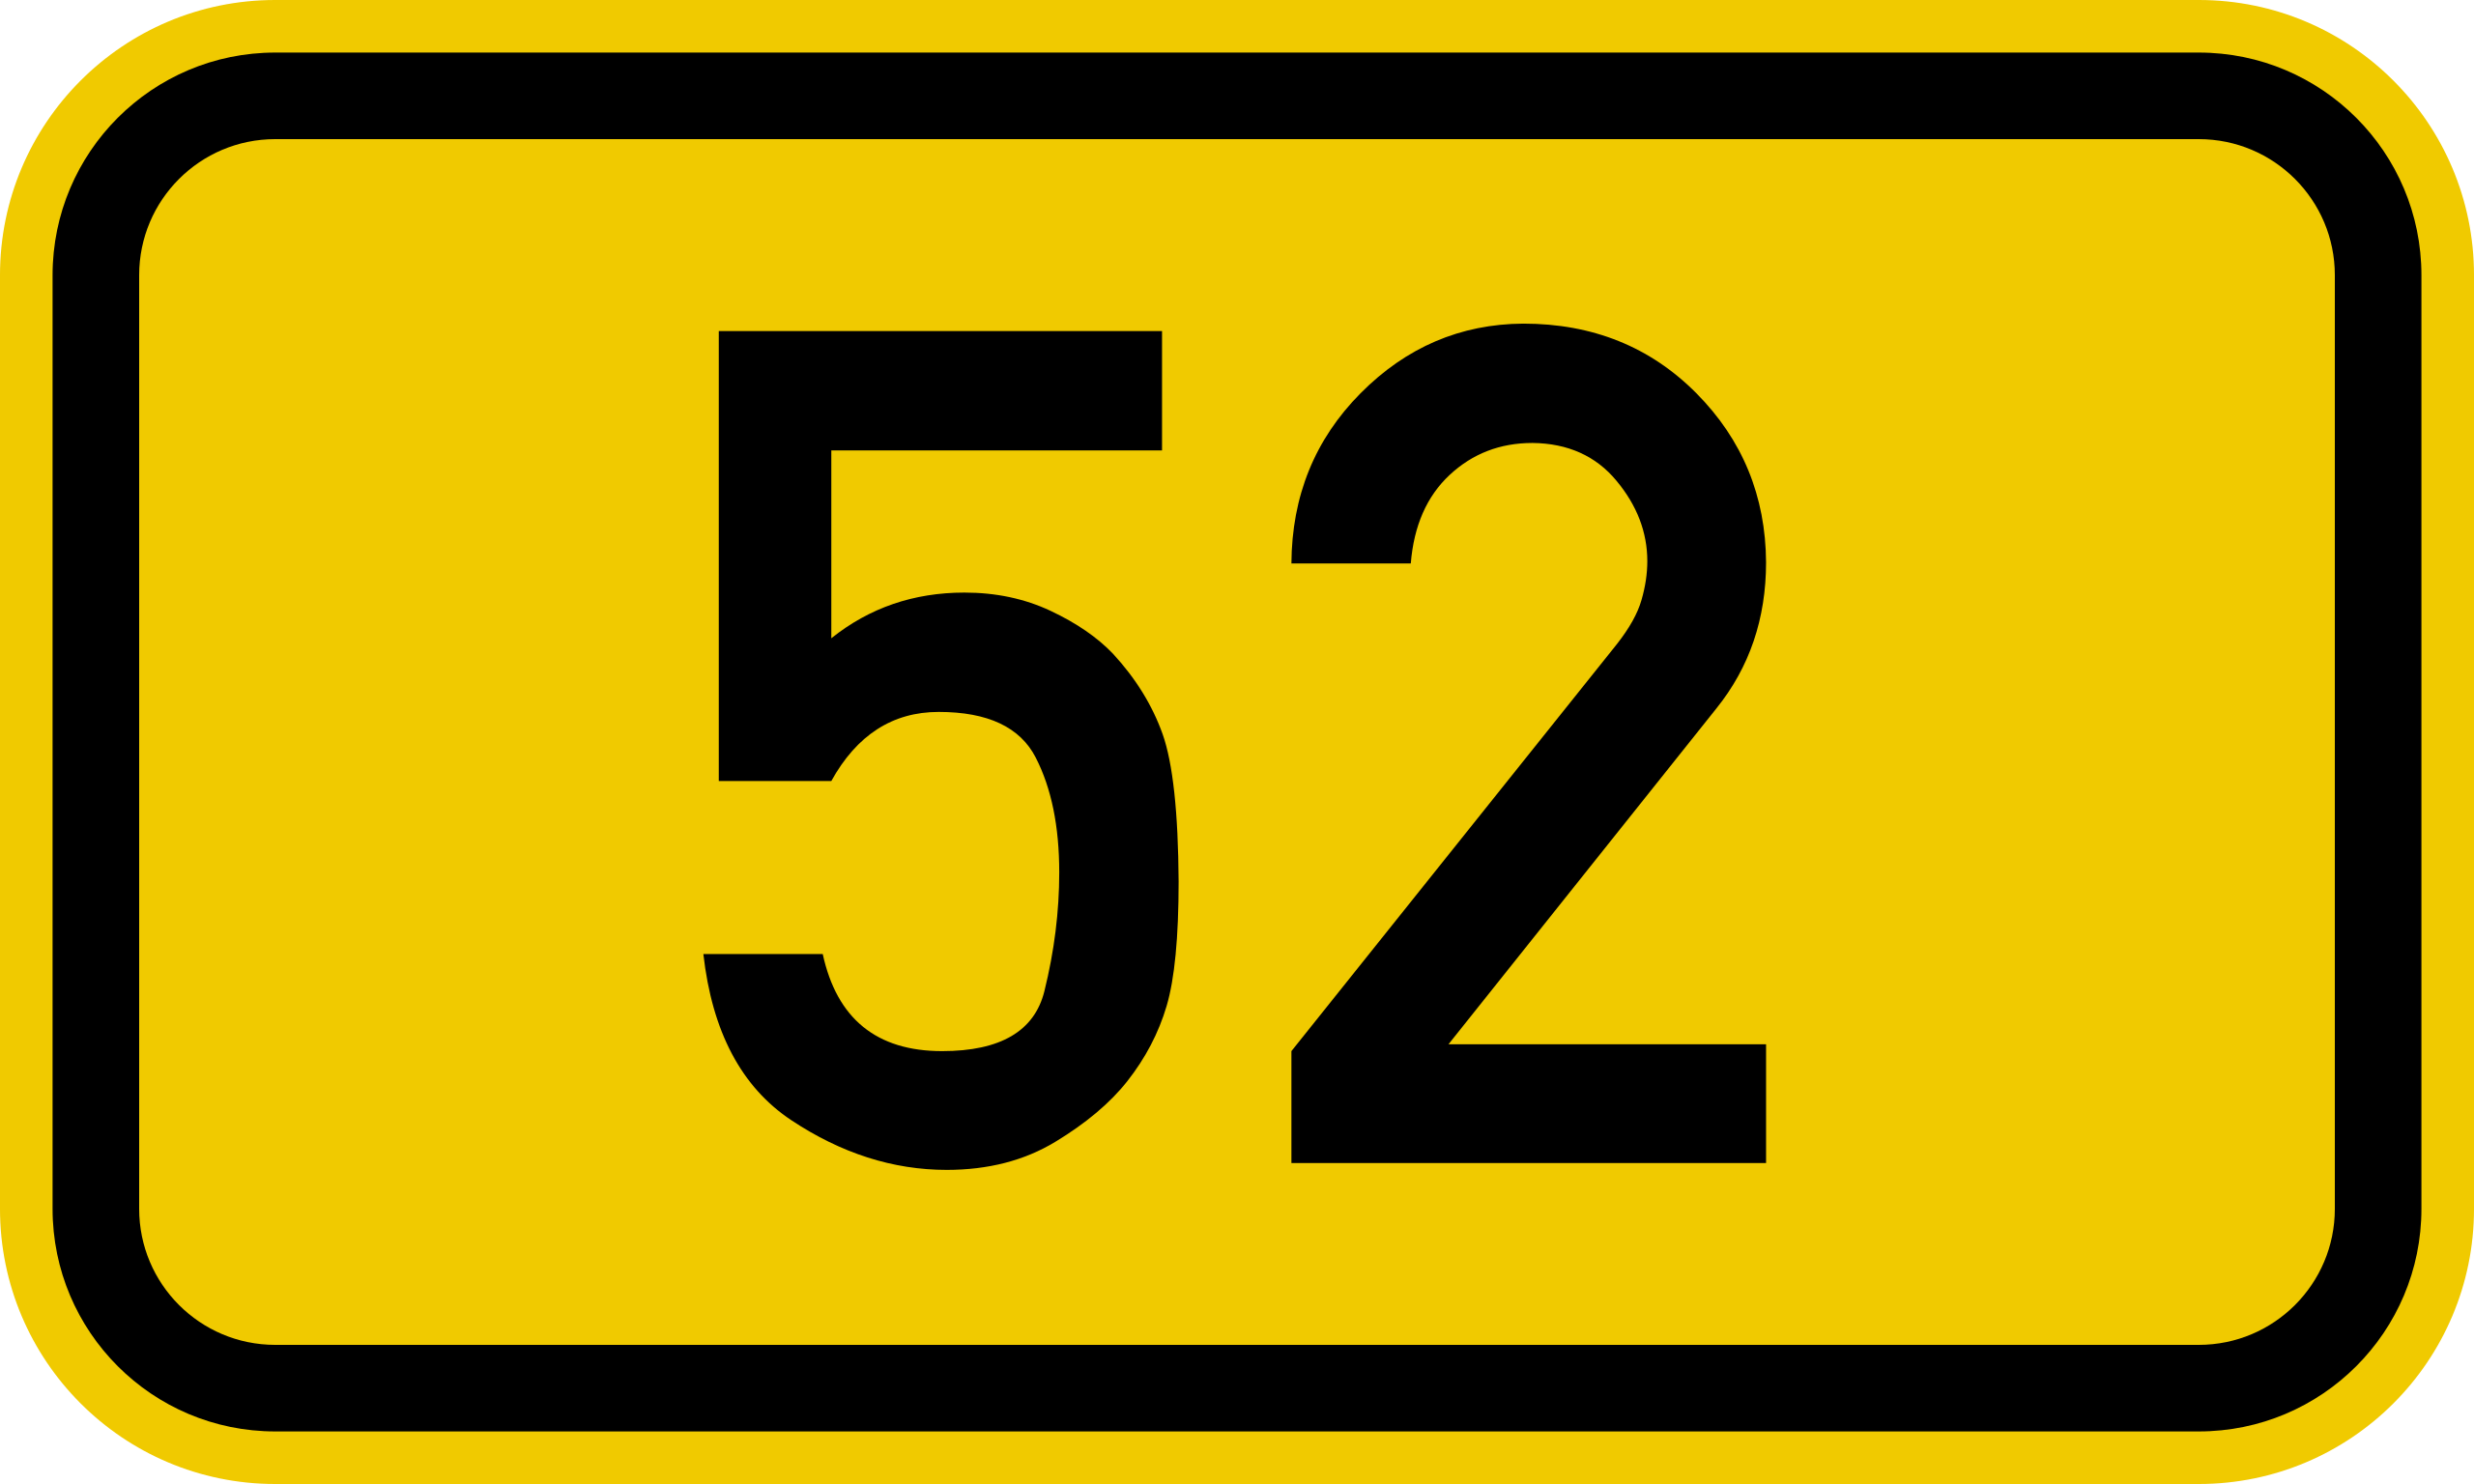 File:Bundesstraße 52 number.svg - Wikimedia Commons